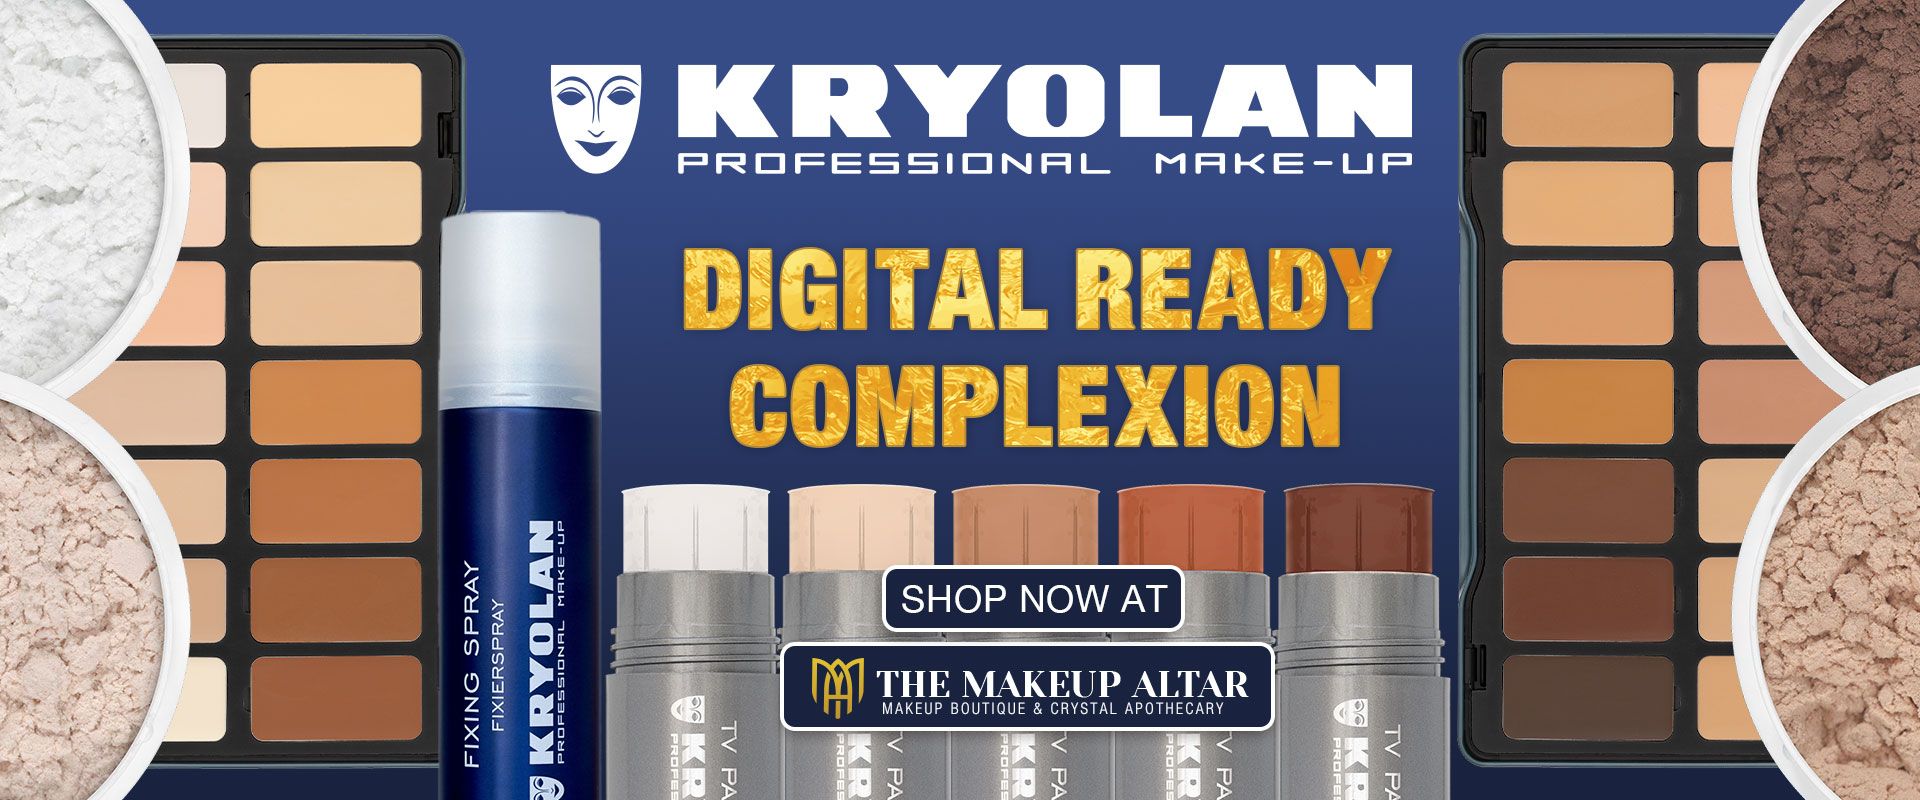 Kryolan Digital Ready Complexion Banner